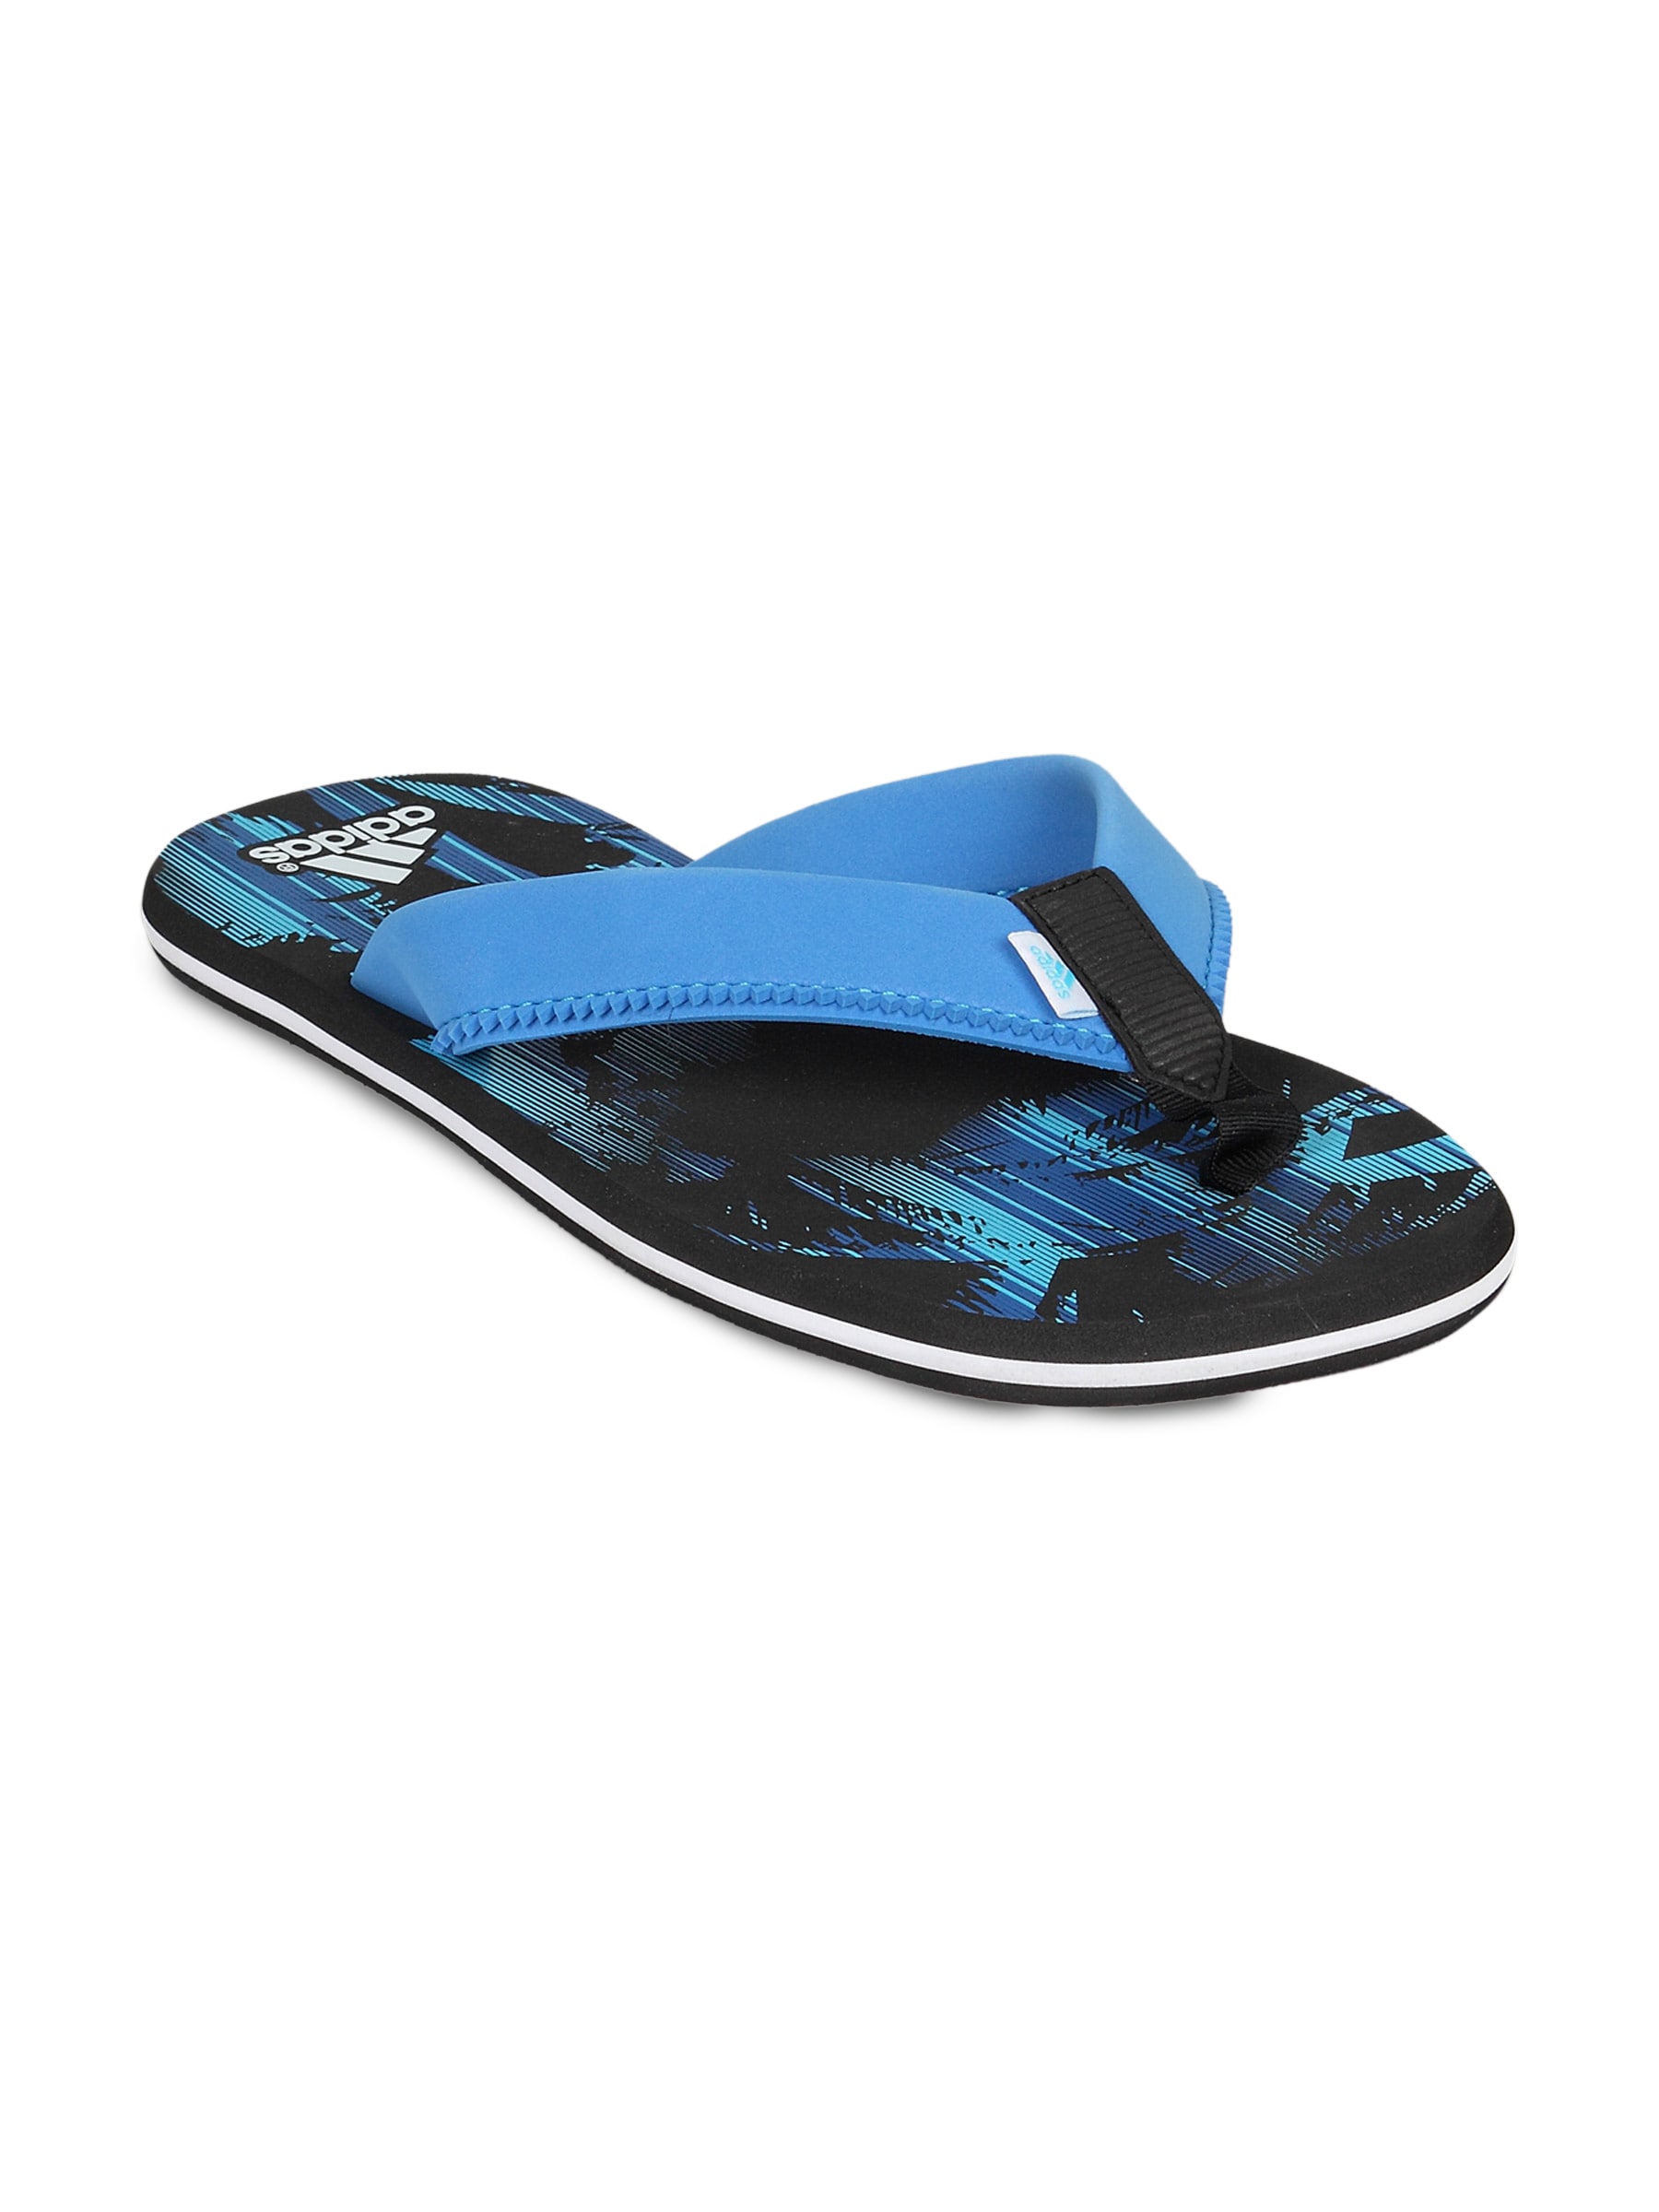 ADIDAS Men's Chewang Slides Black Blue Flip Flops